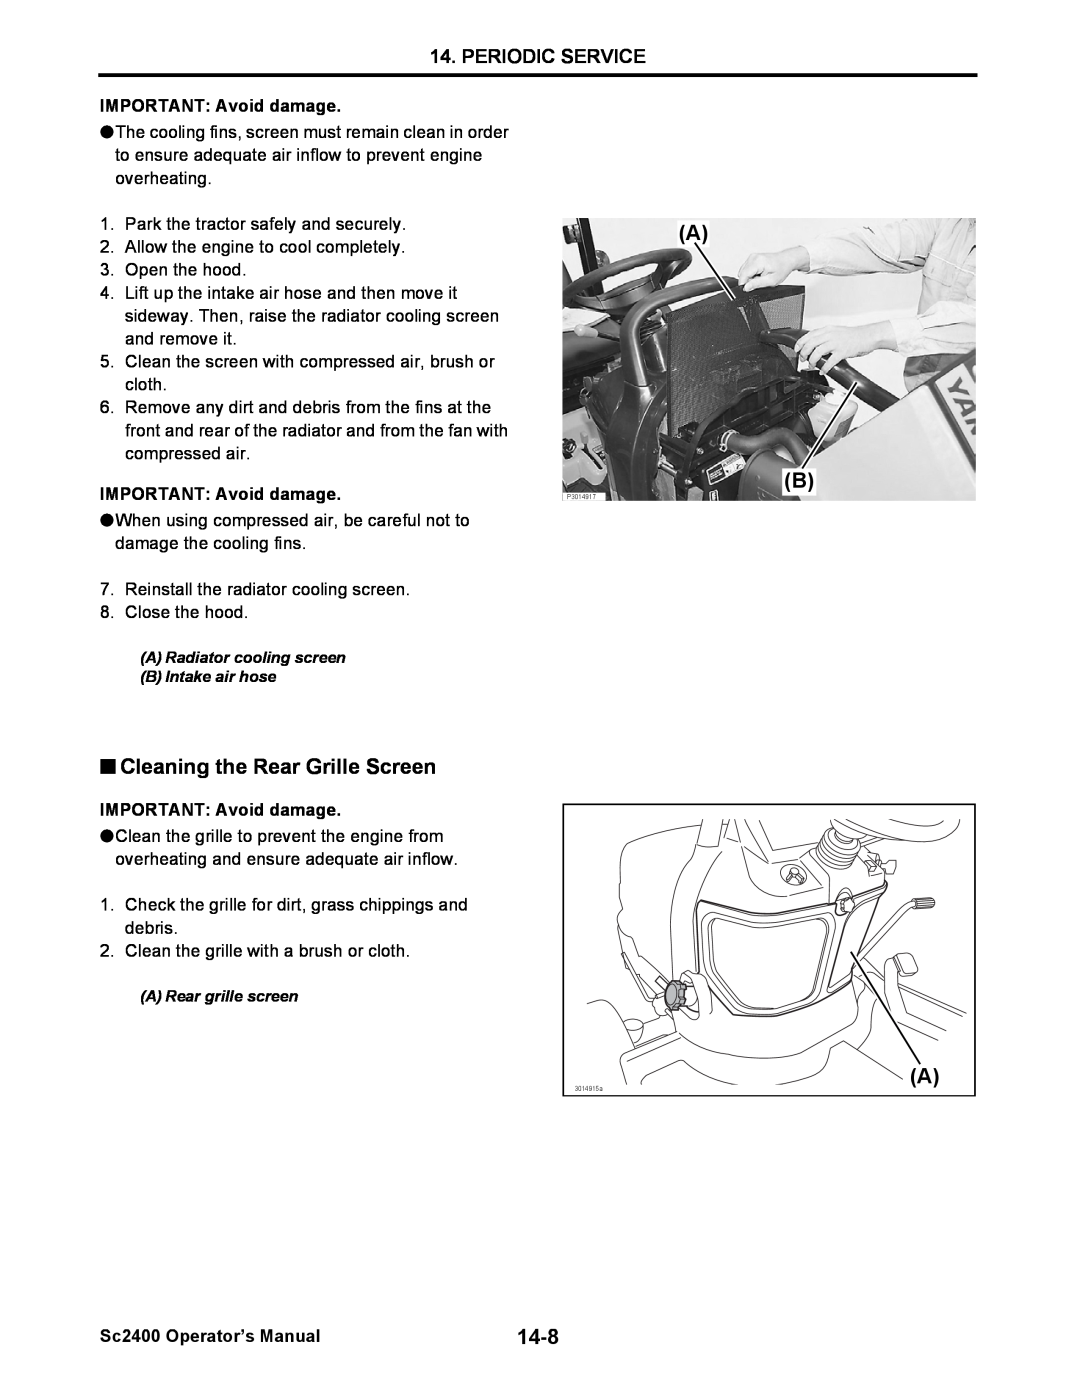 Cub Cadet SC2400 manual Periodic Service, IMPORTANT: Avoid damage, IMPORTANT Avoid damage, Sc2400 Operator’s Manual 